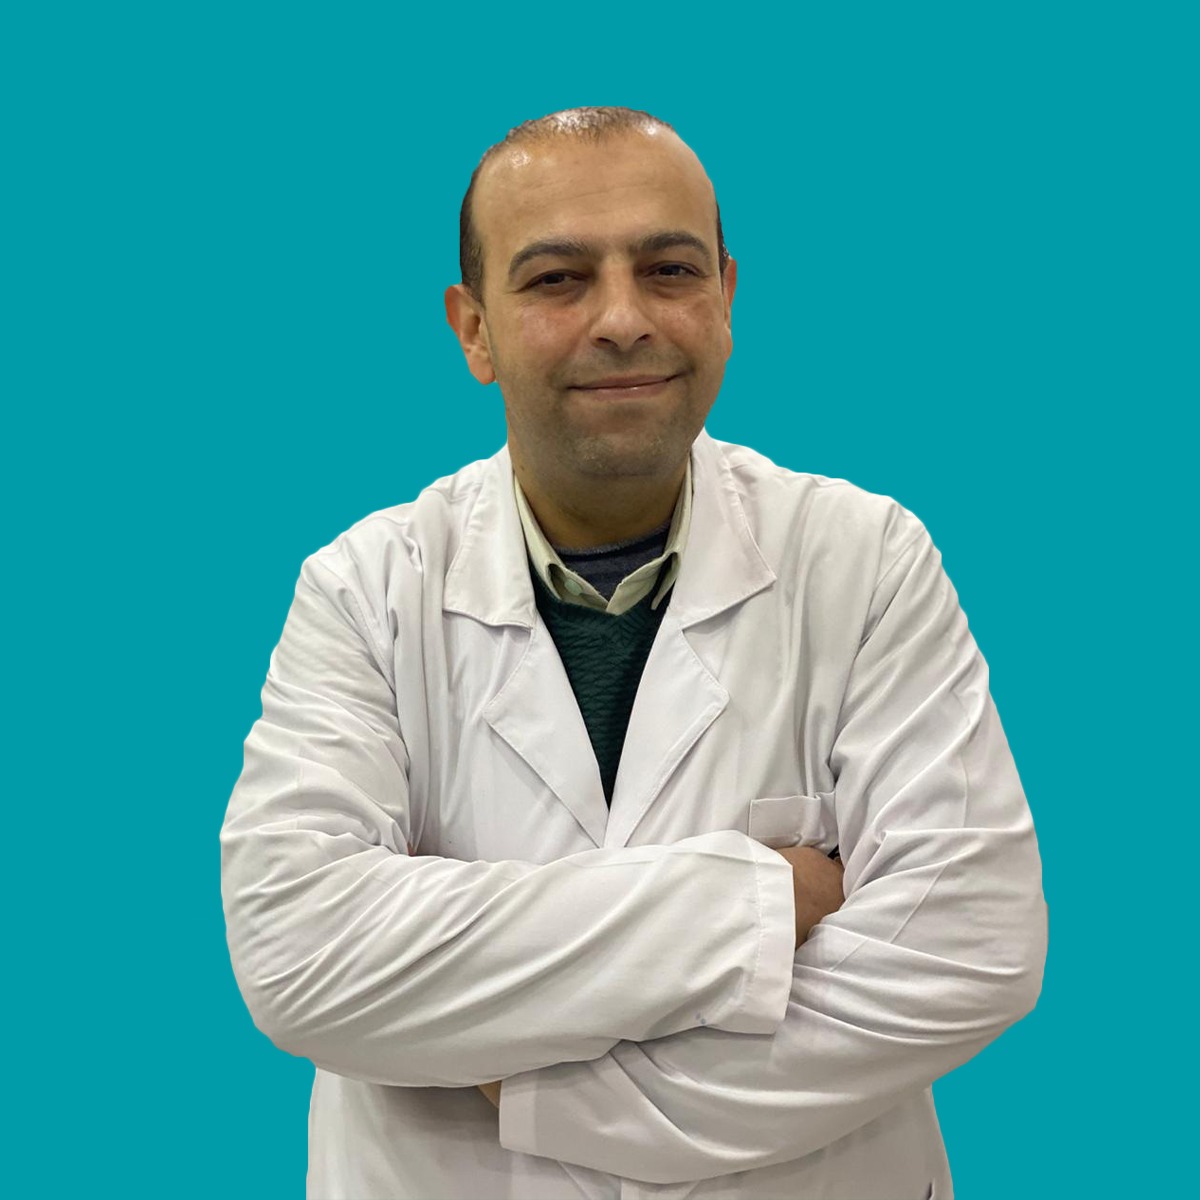 Dr. Ahmed El-Shazly